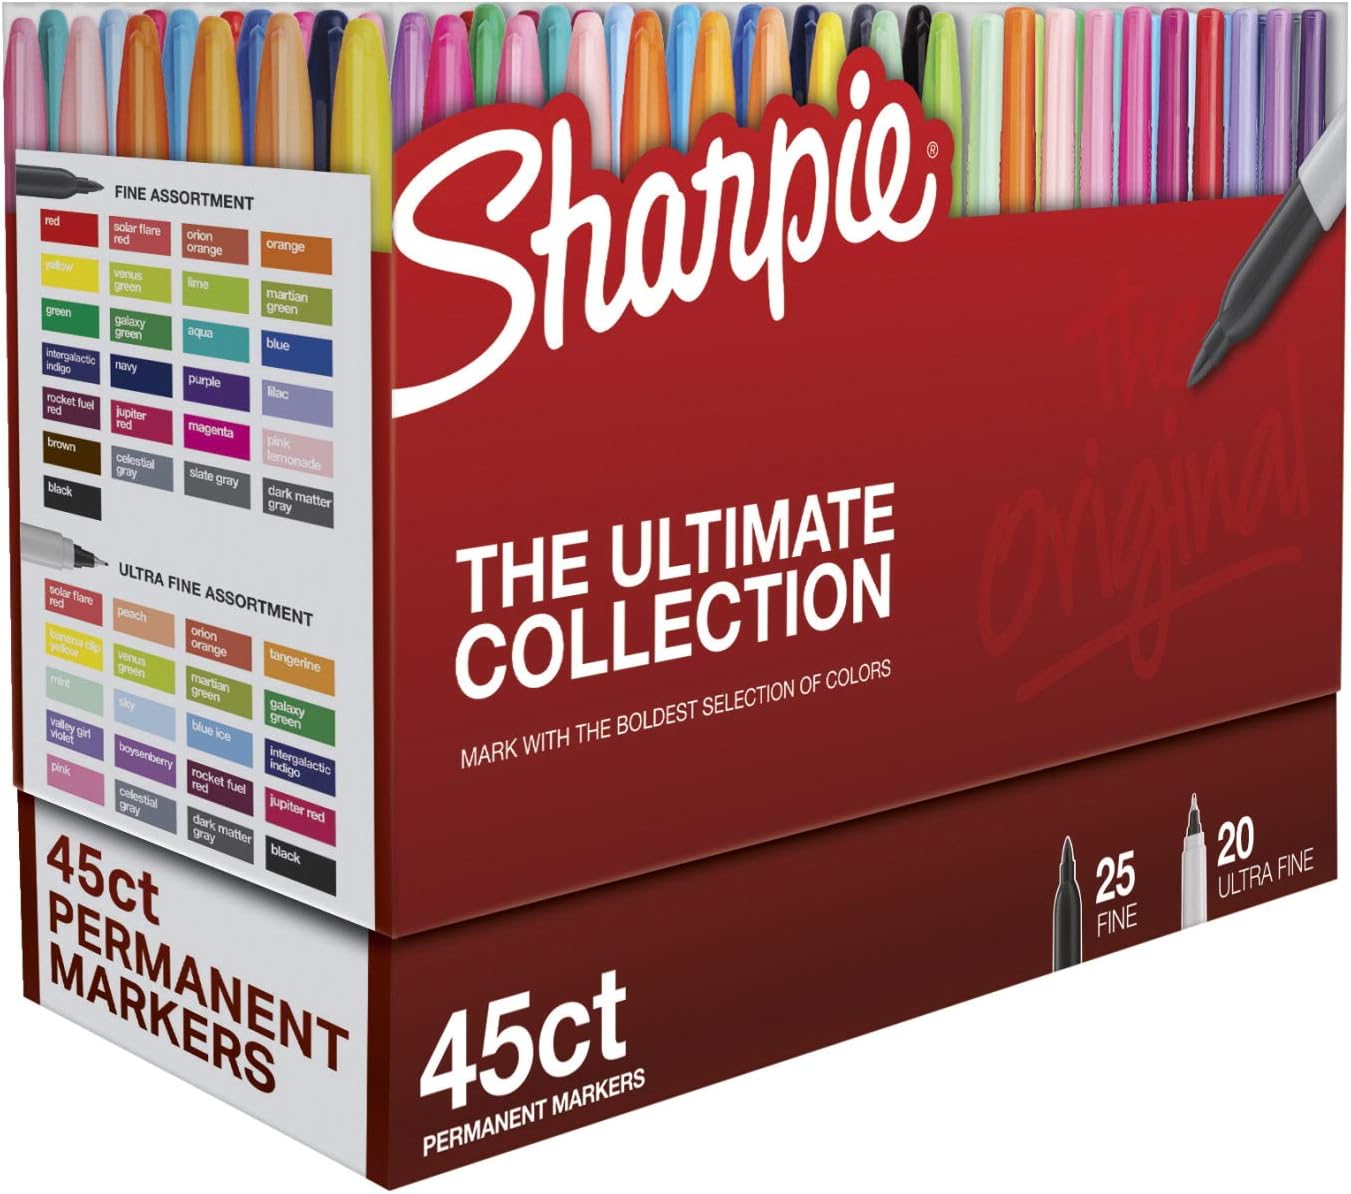 Sharpie marker collection